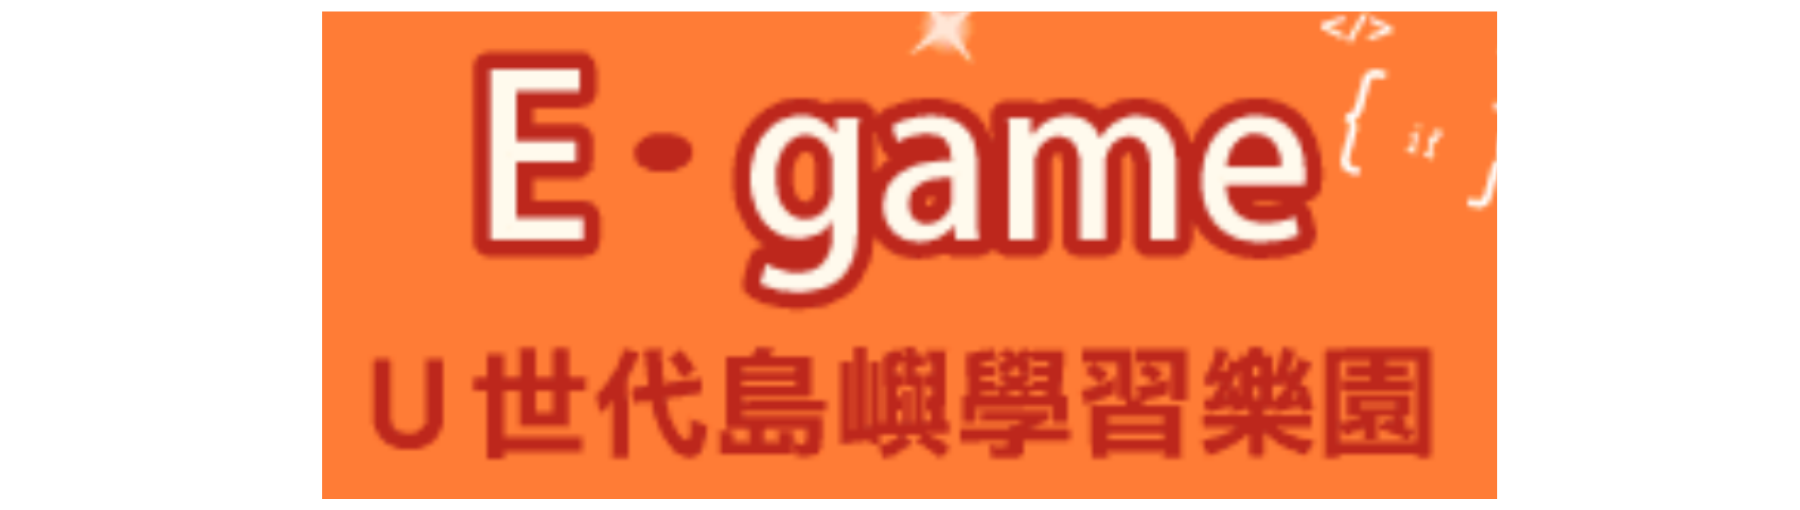 E-game(另開新視窗)